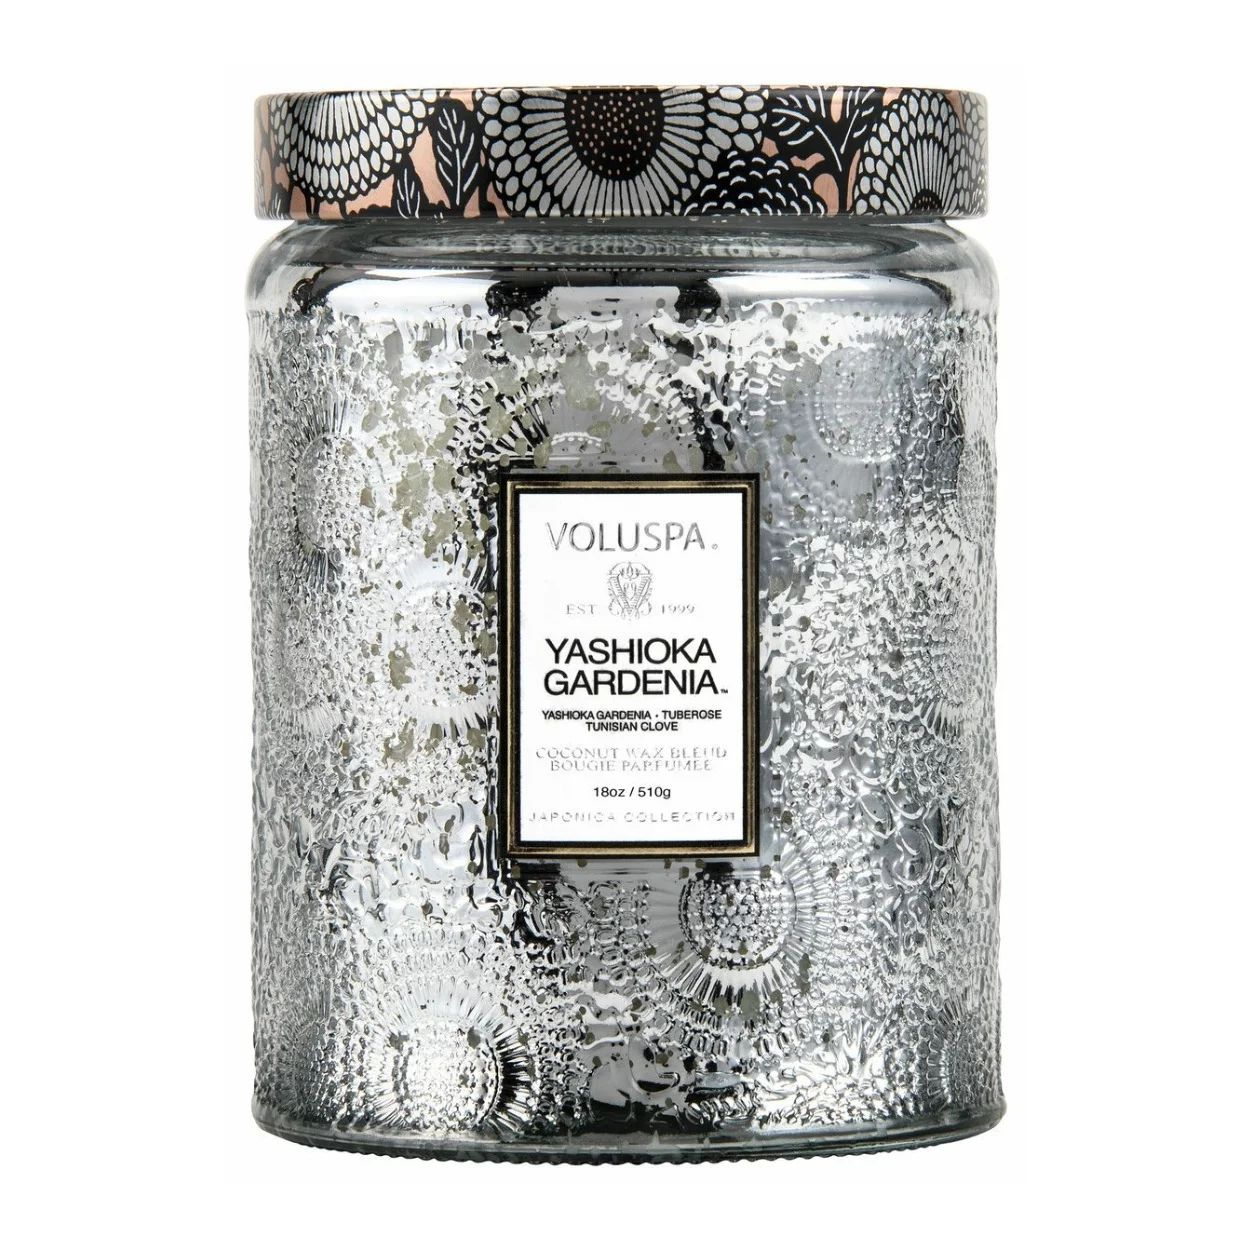 Voluspa Yashioka Gardenia Large Glass Candle 100 hour (18 oz / 510 g) | Walmart (US)